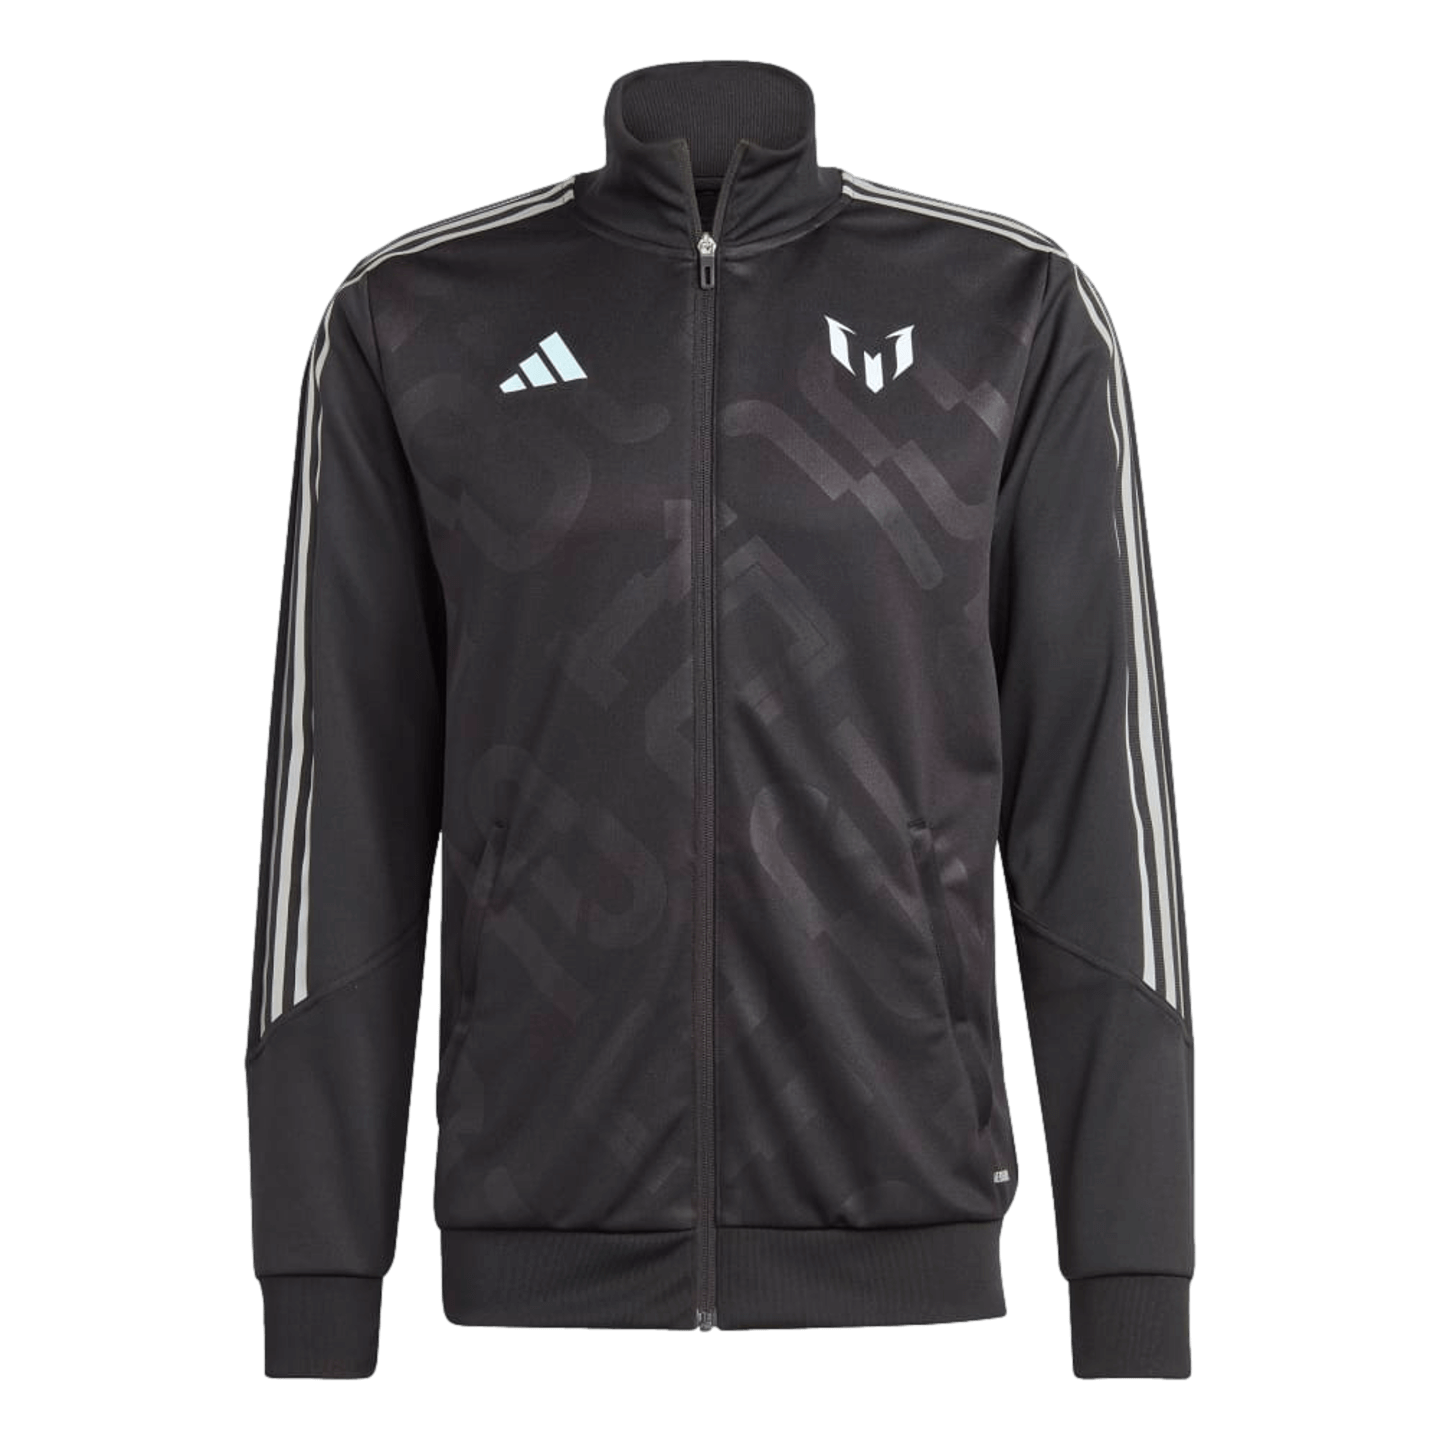 Adidas Messi Jacket